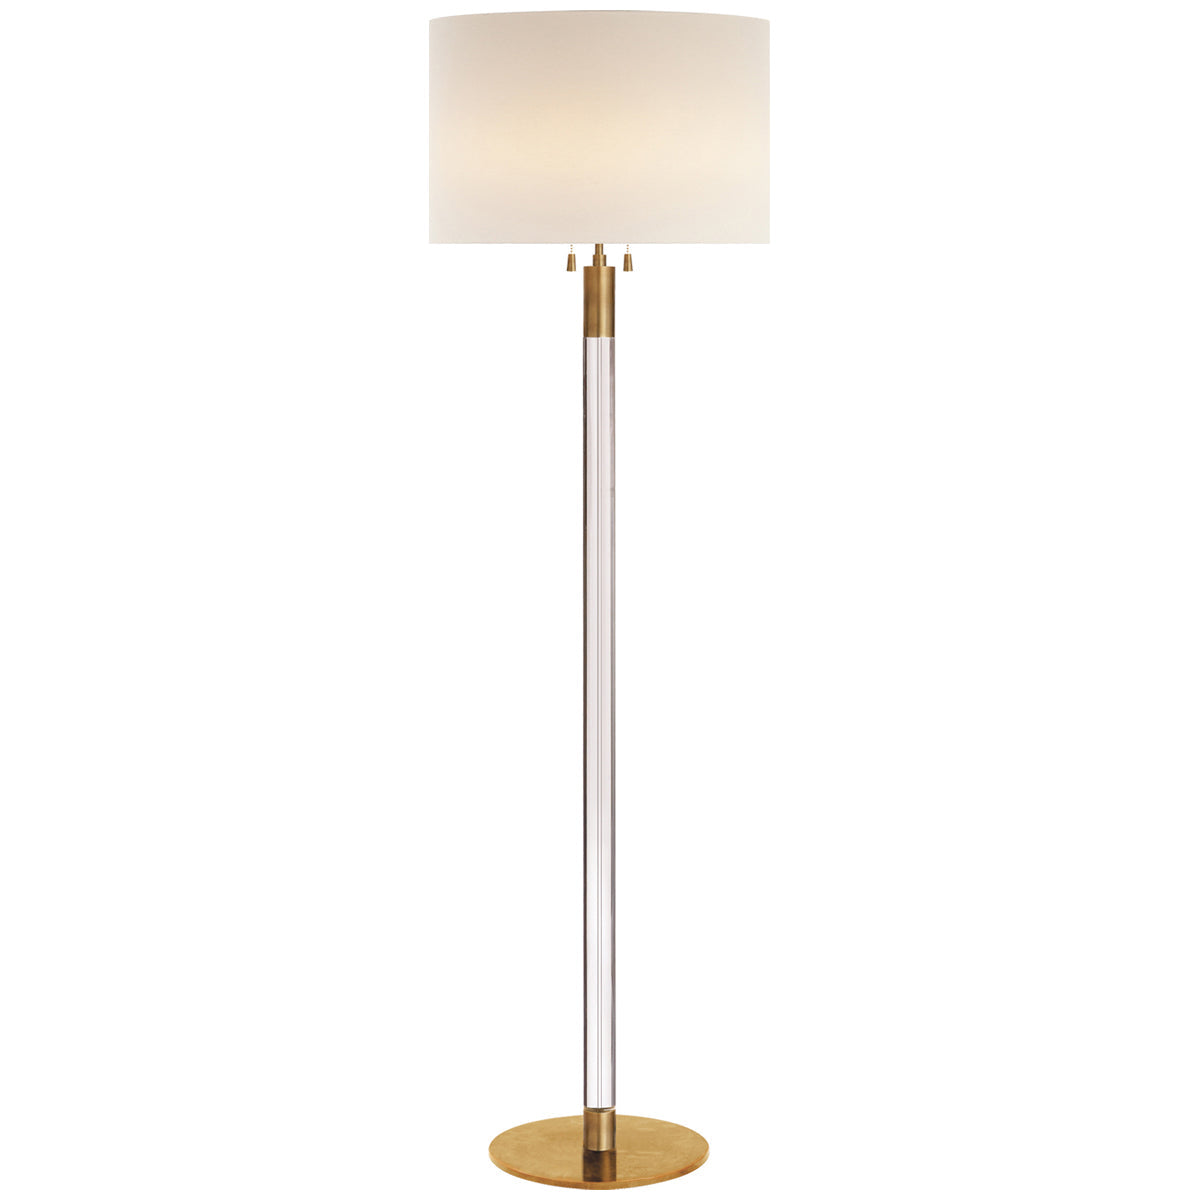 Visual Comfort Riga Floor Lamp